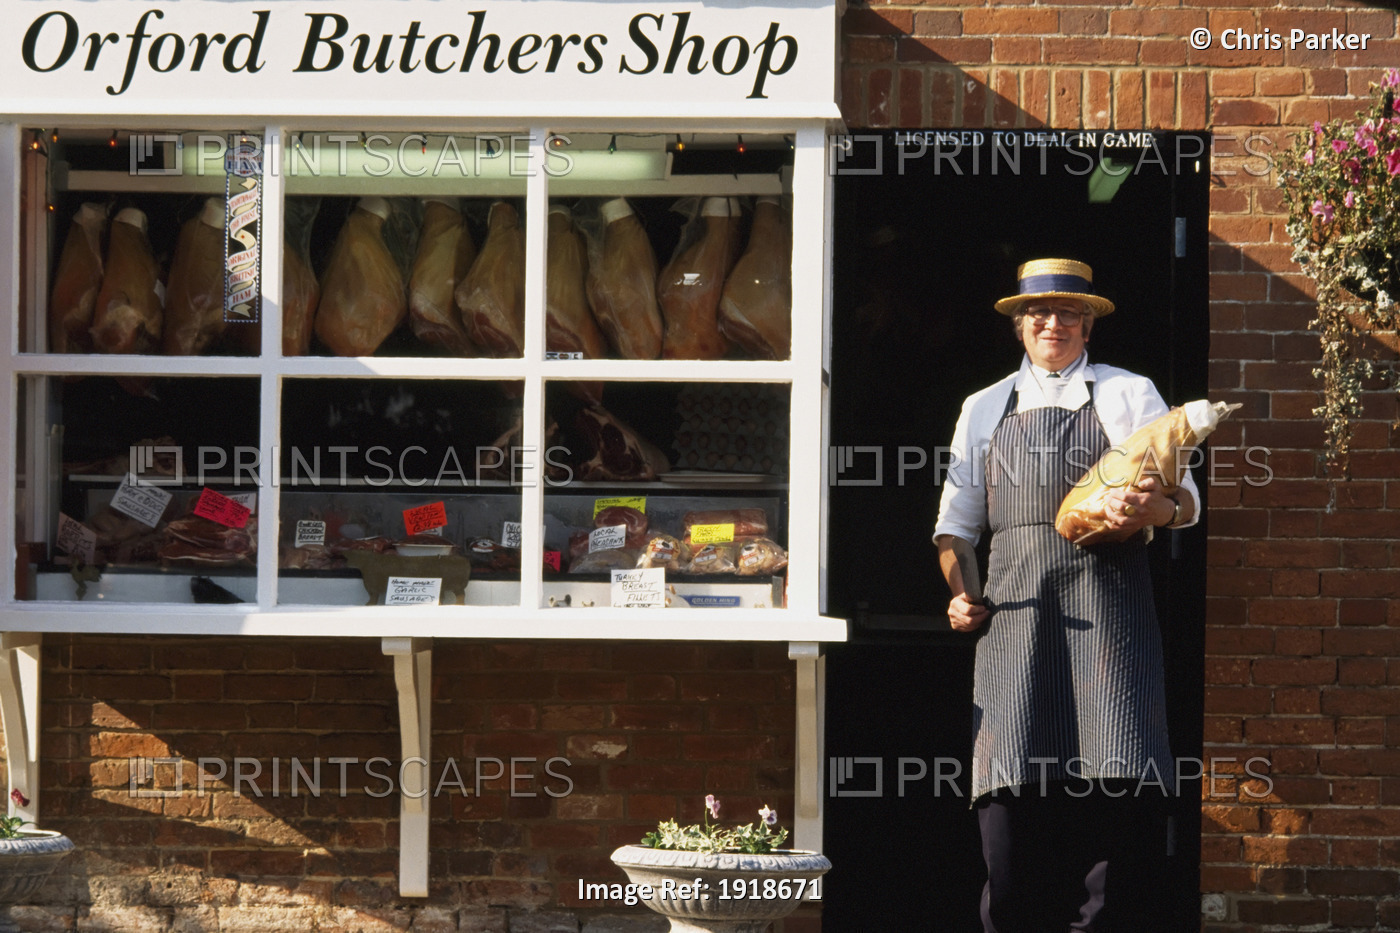 Butcher's Shop, Orford